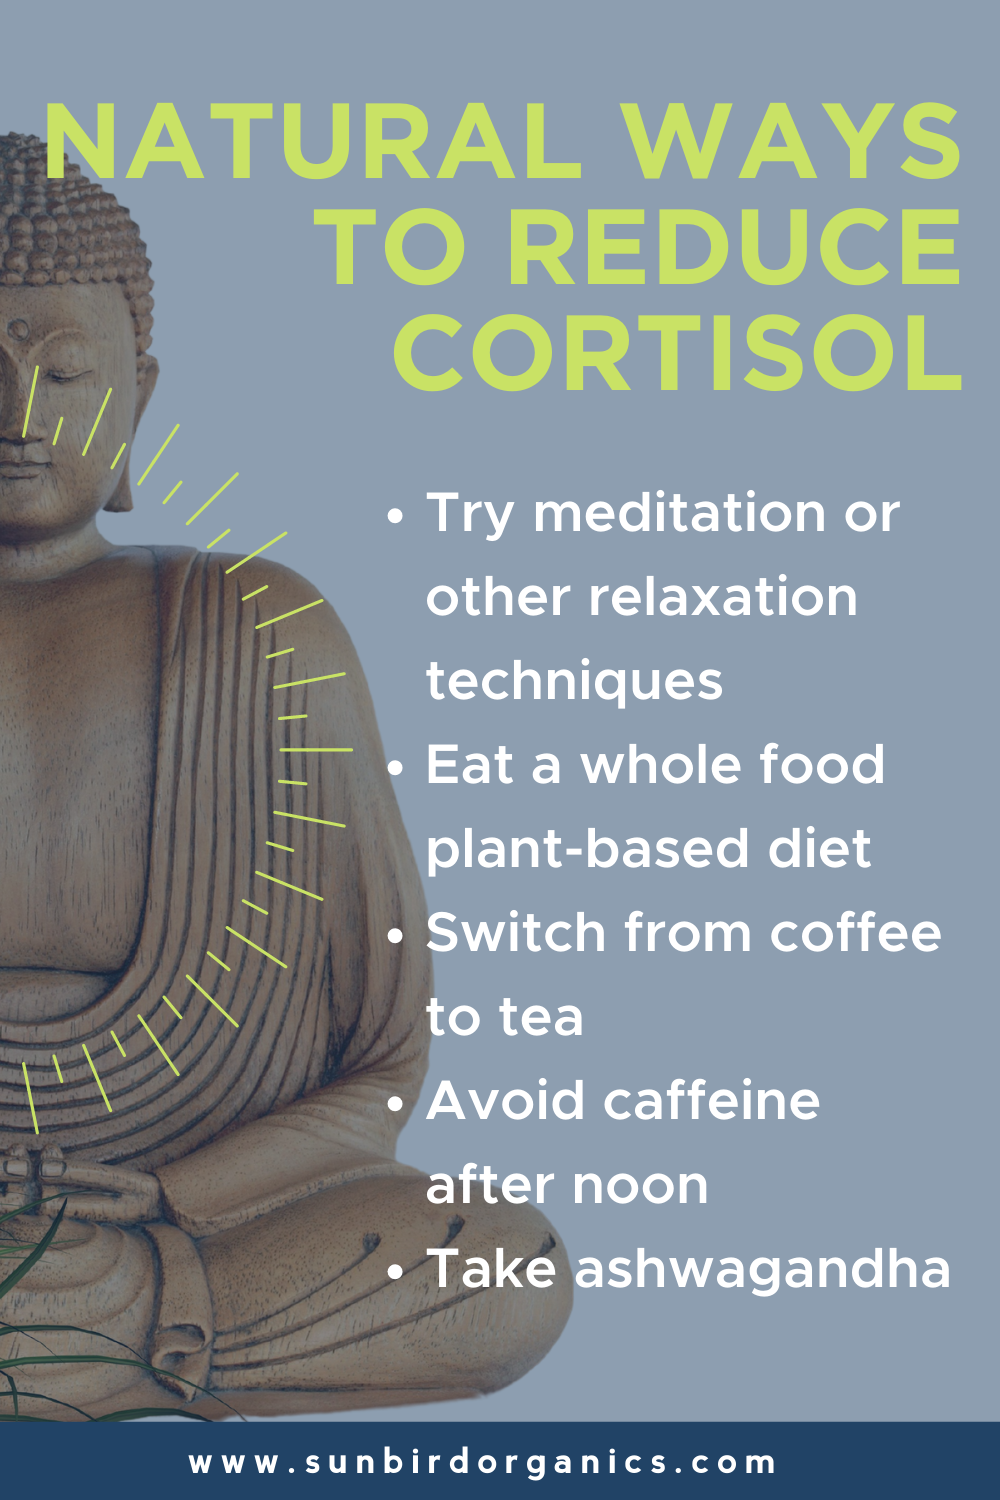 Natural Ways to Reduce Cortisol